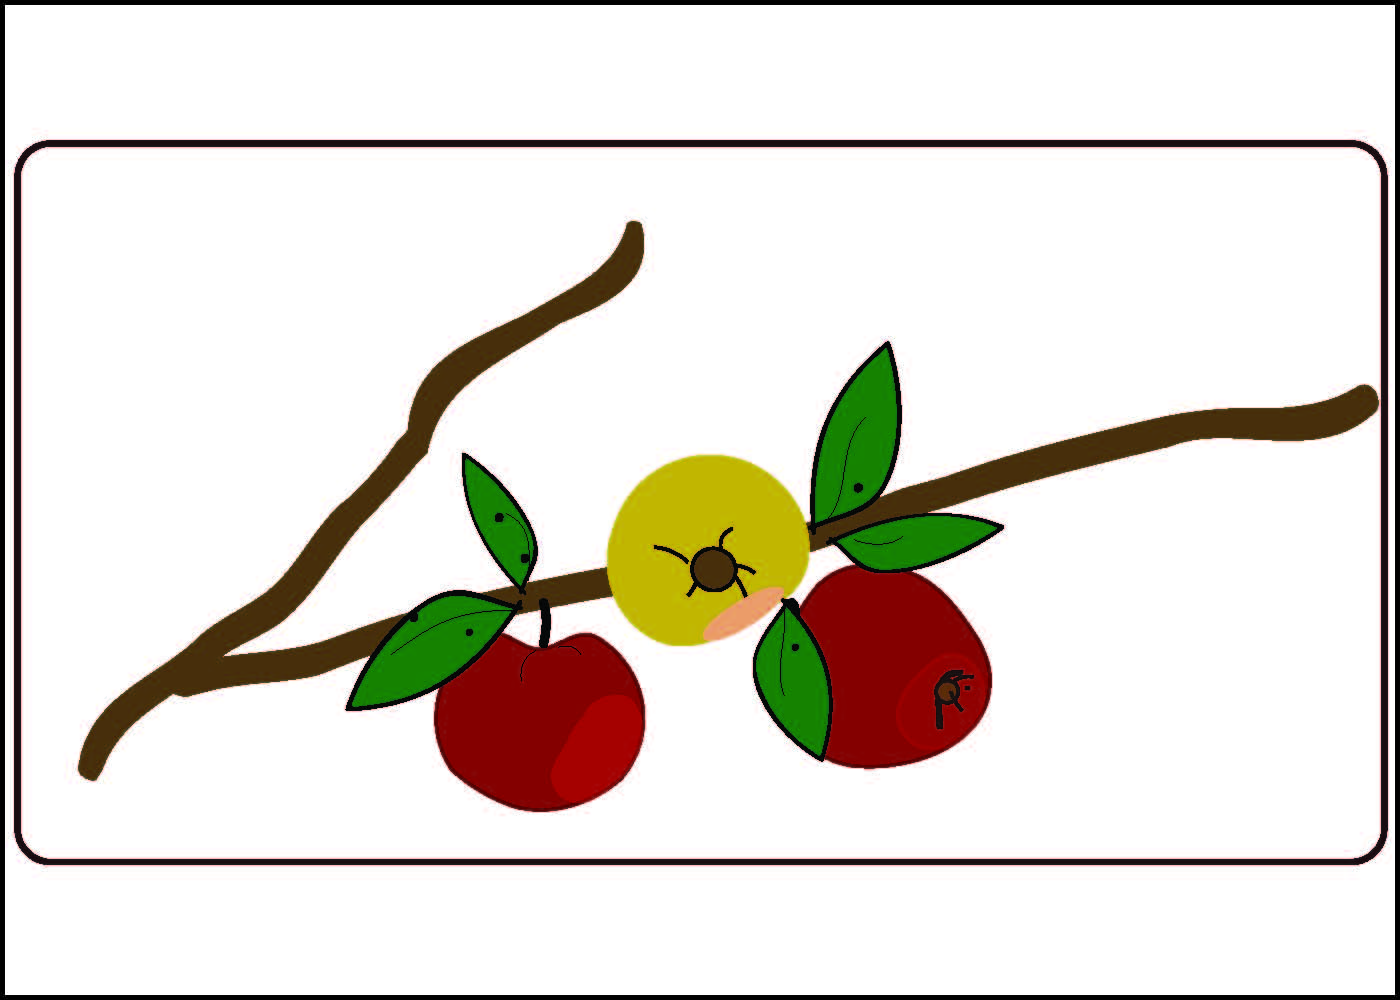 [apples-illustration.jpg]